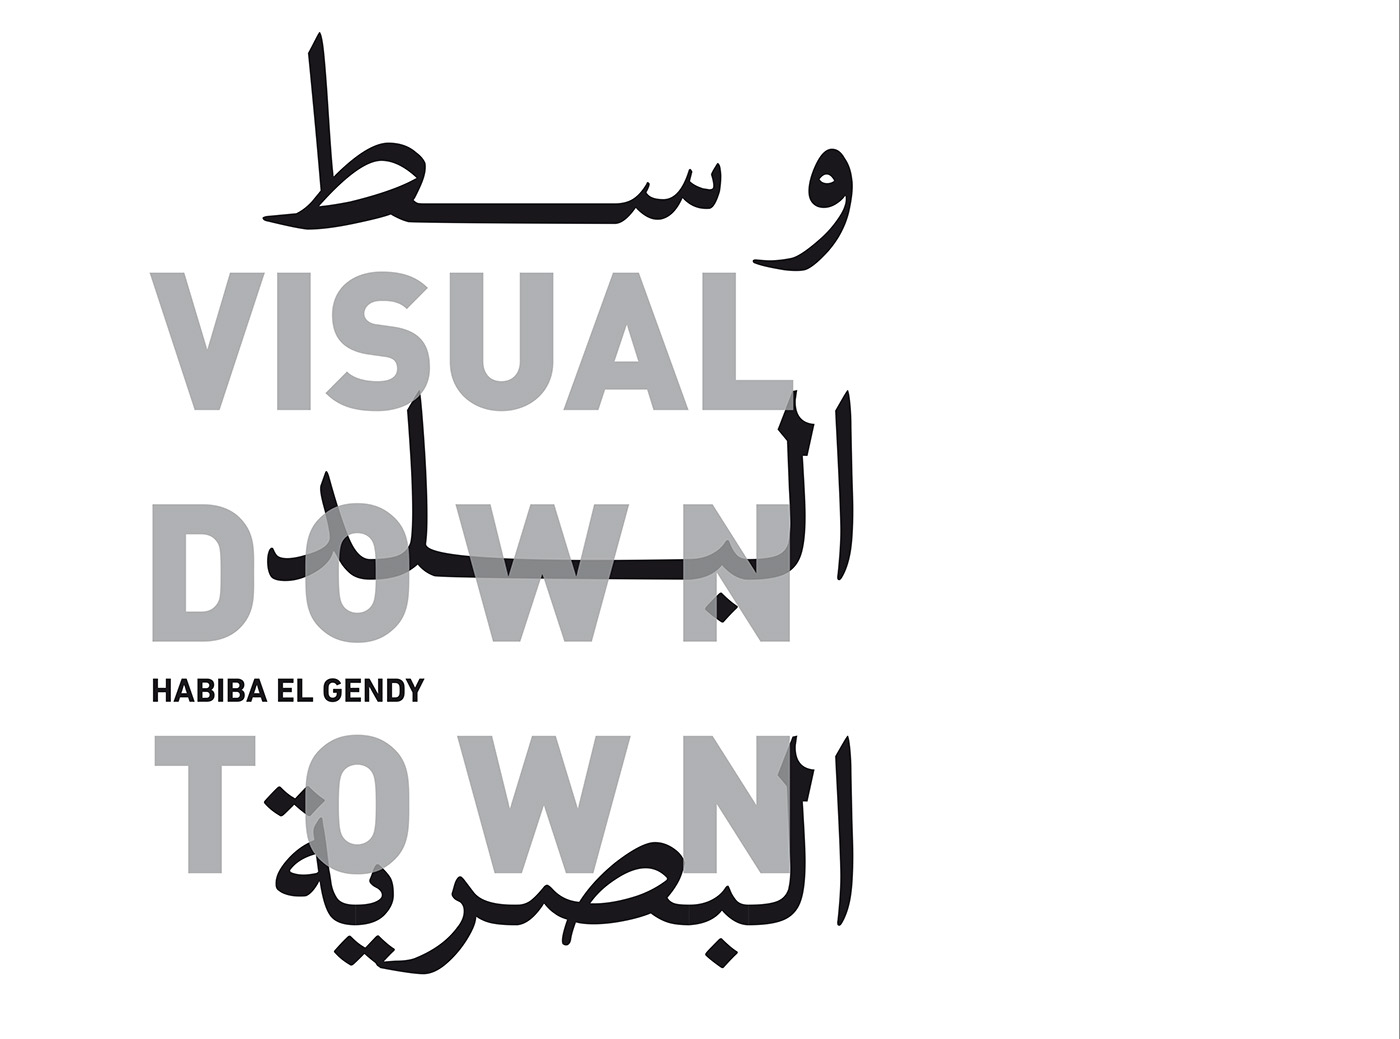 egypt cairo habiba el gendy graphic design thesis thesis Bachelor Project downtown wust el balad west el balad AUC